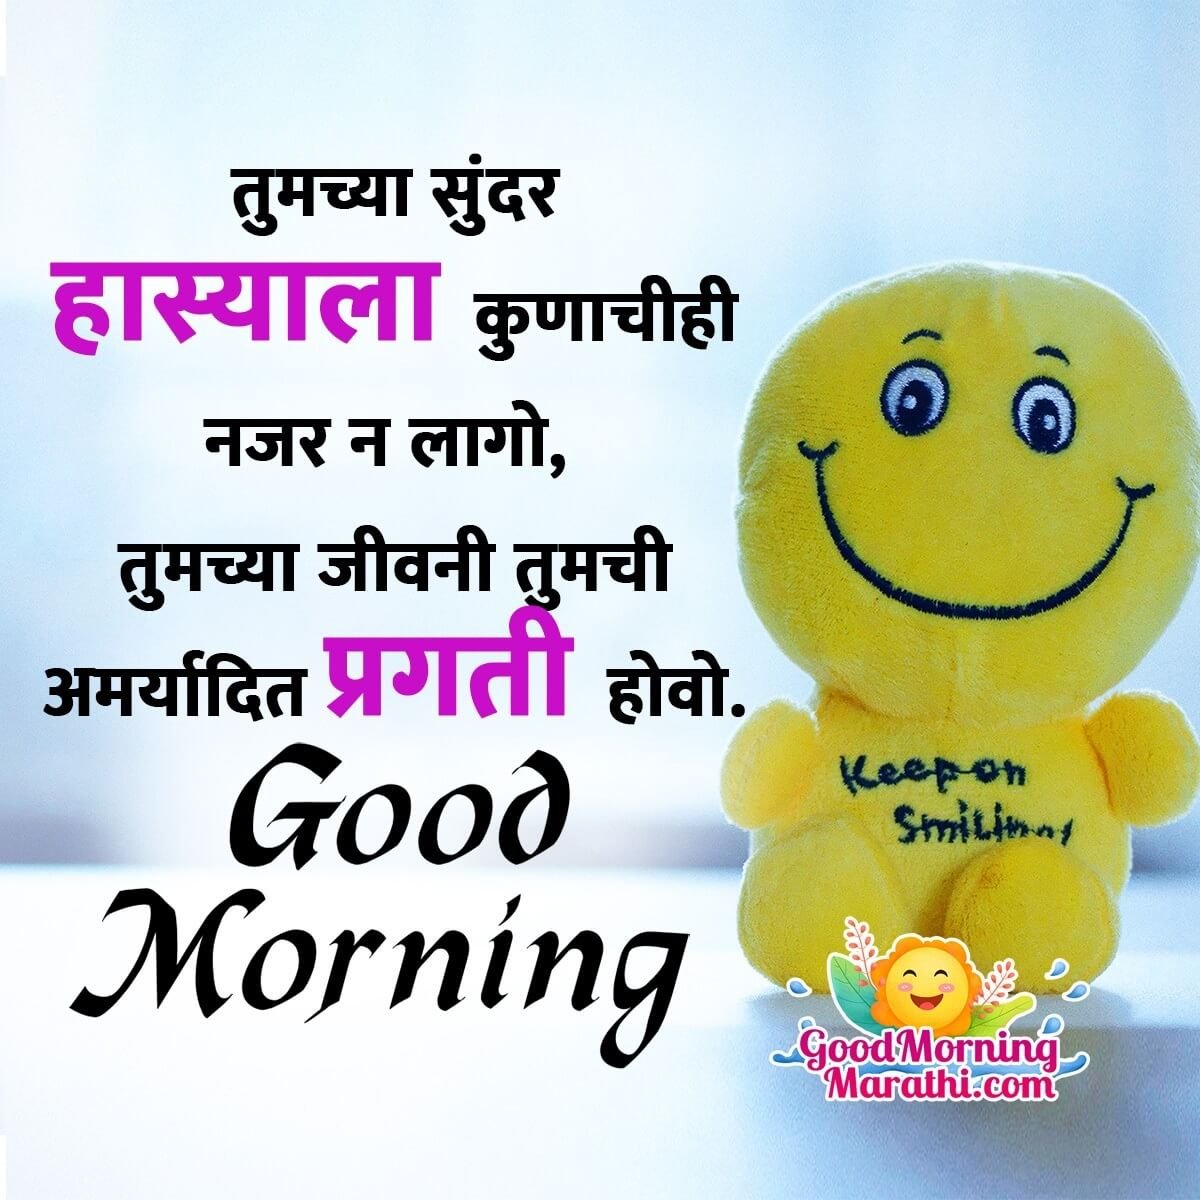 Good Morning Wishes Images In Marathi - Good Morning Wishes ...